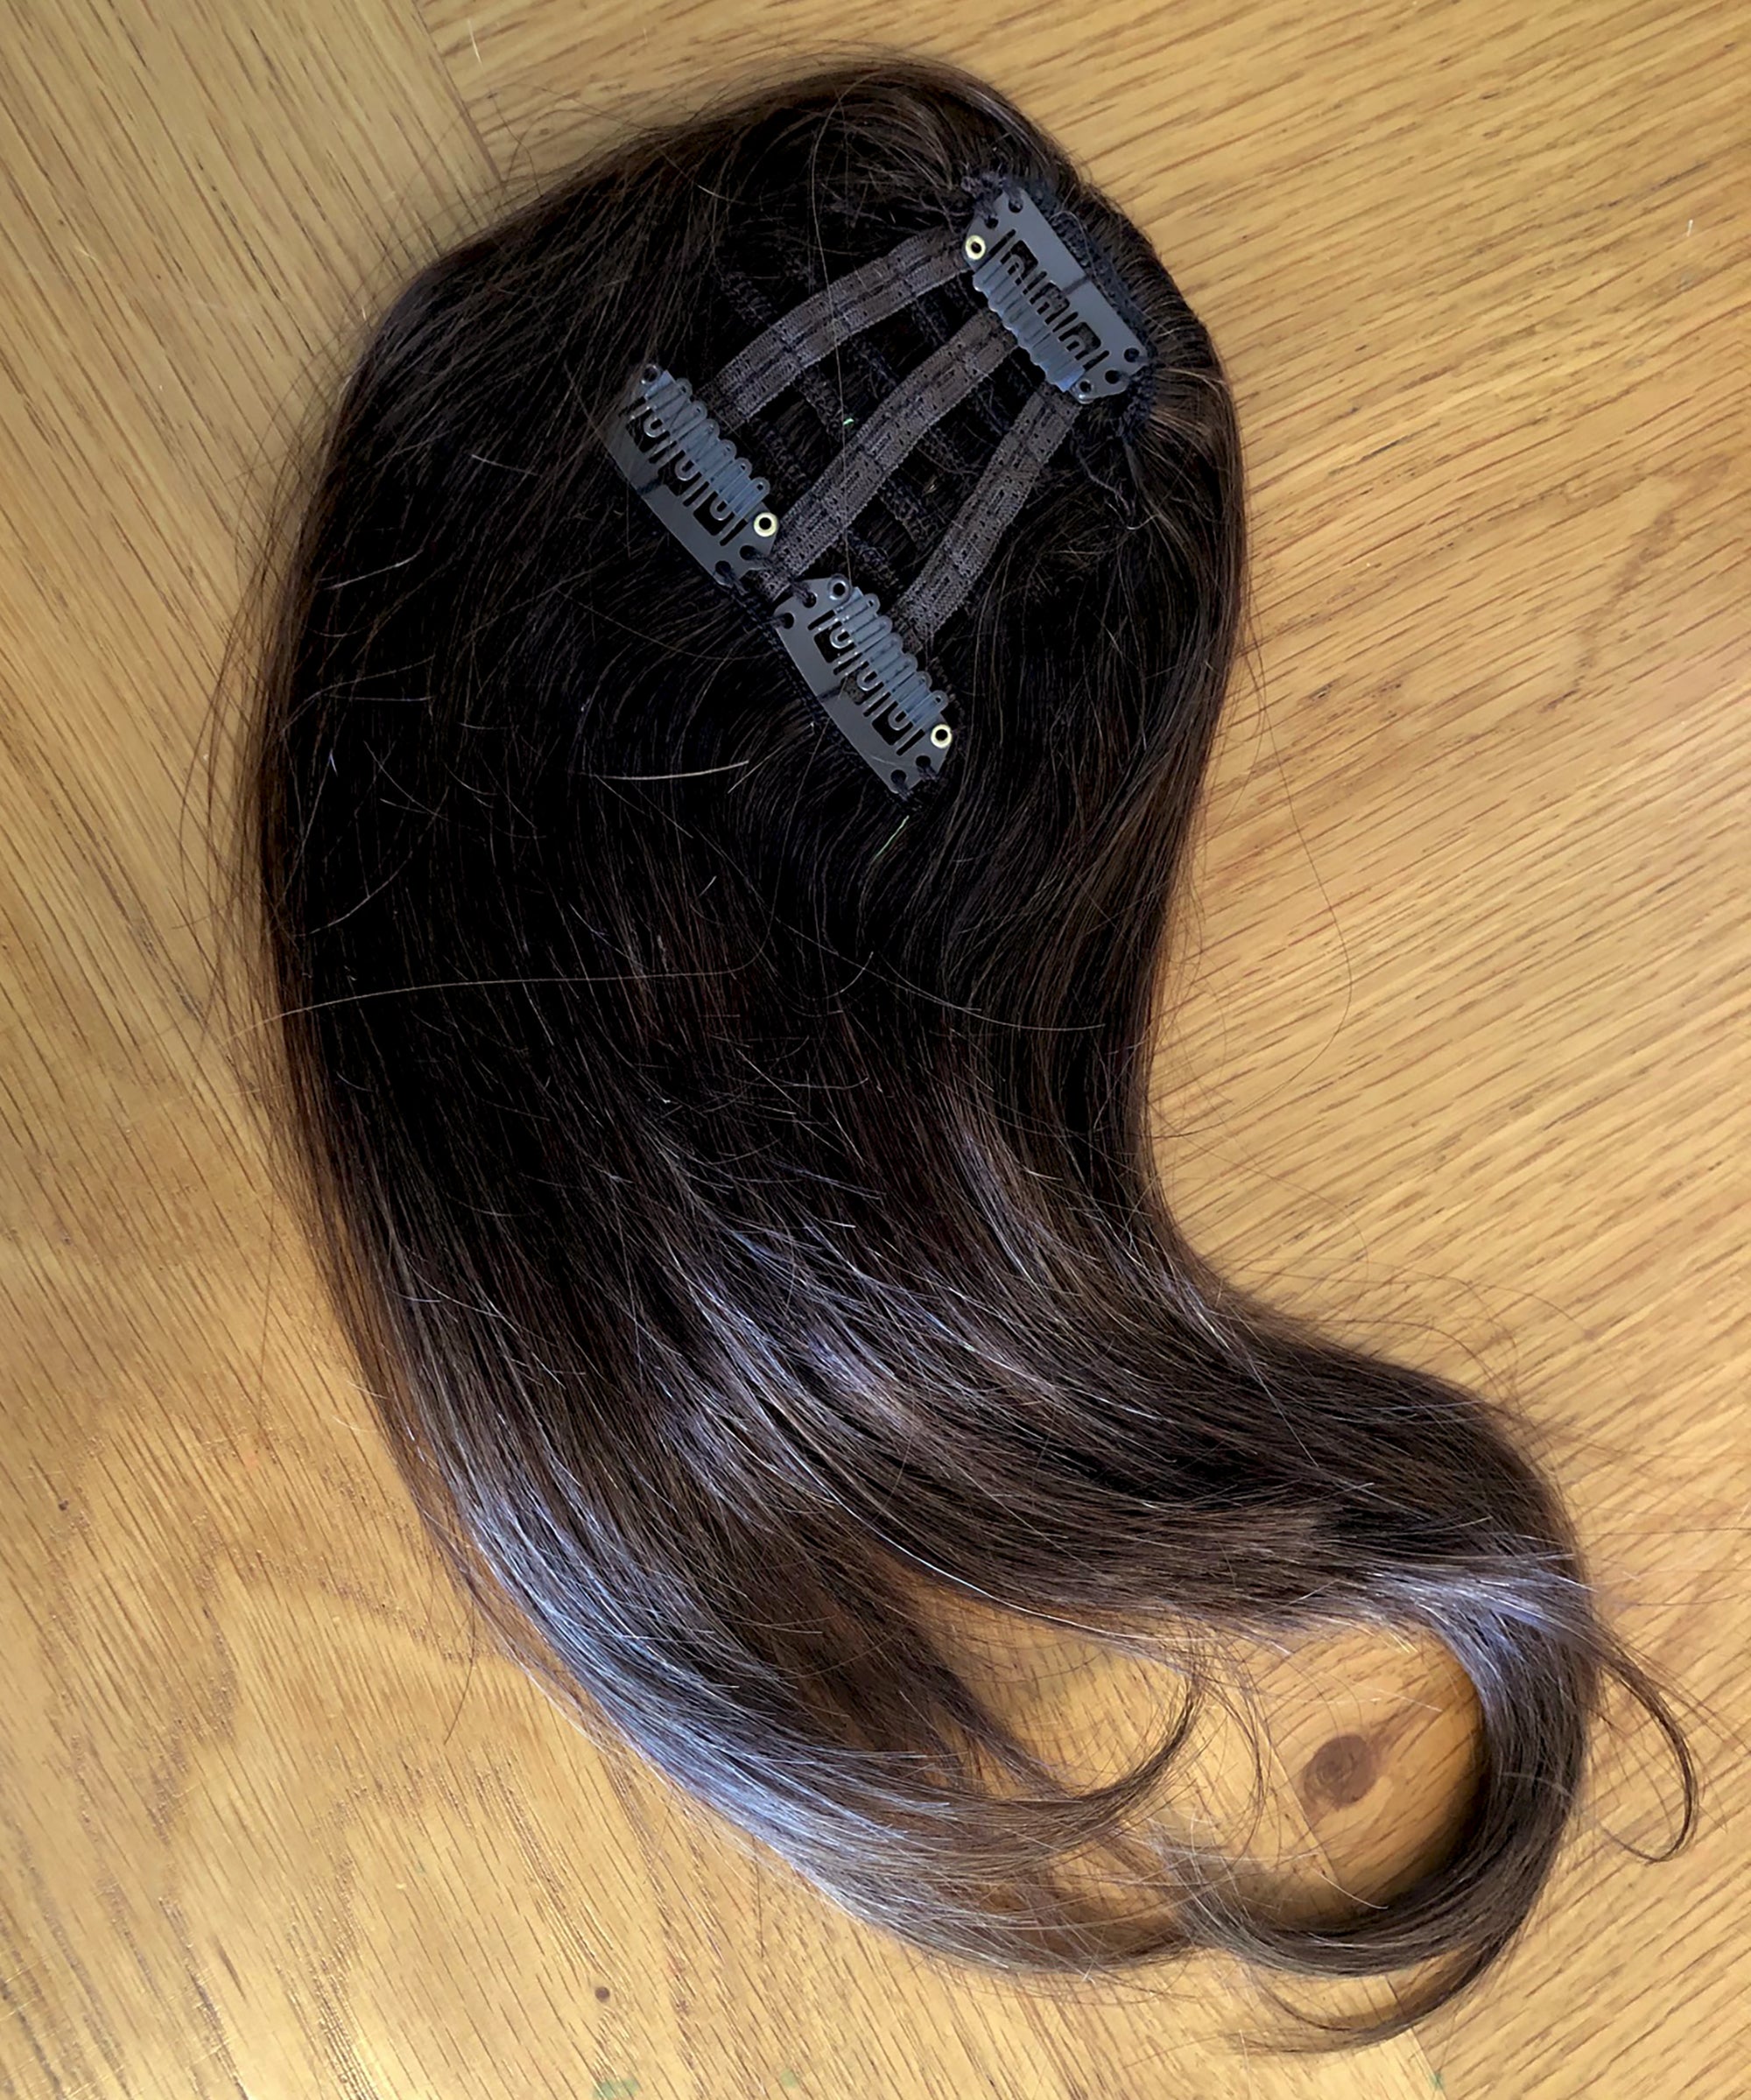 Clip in bangs hair extension mini wig 100% real human (Brown)